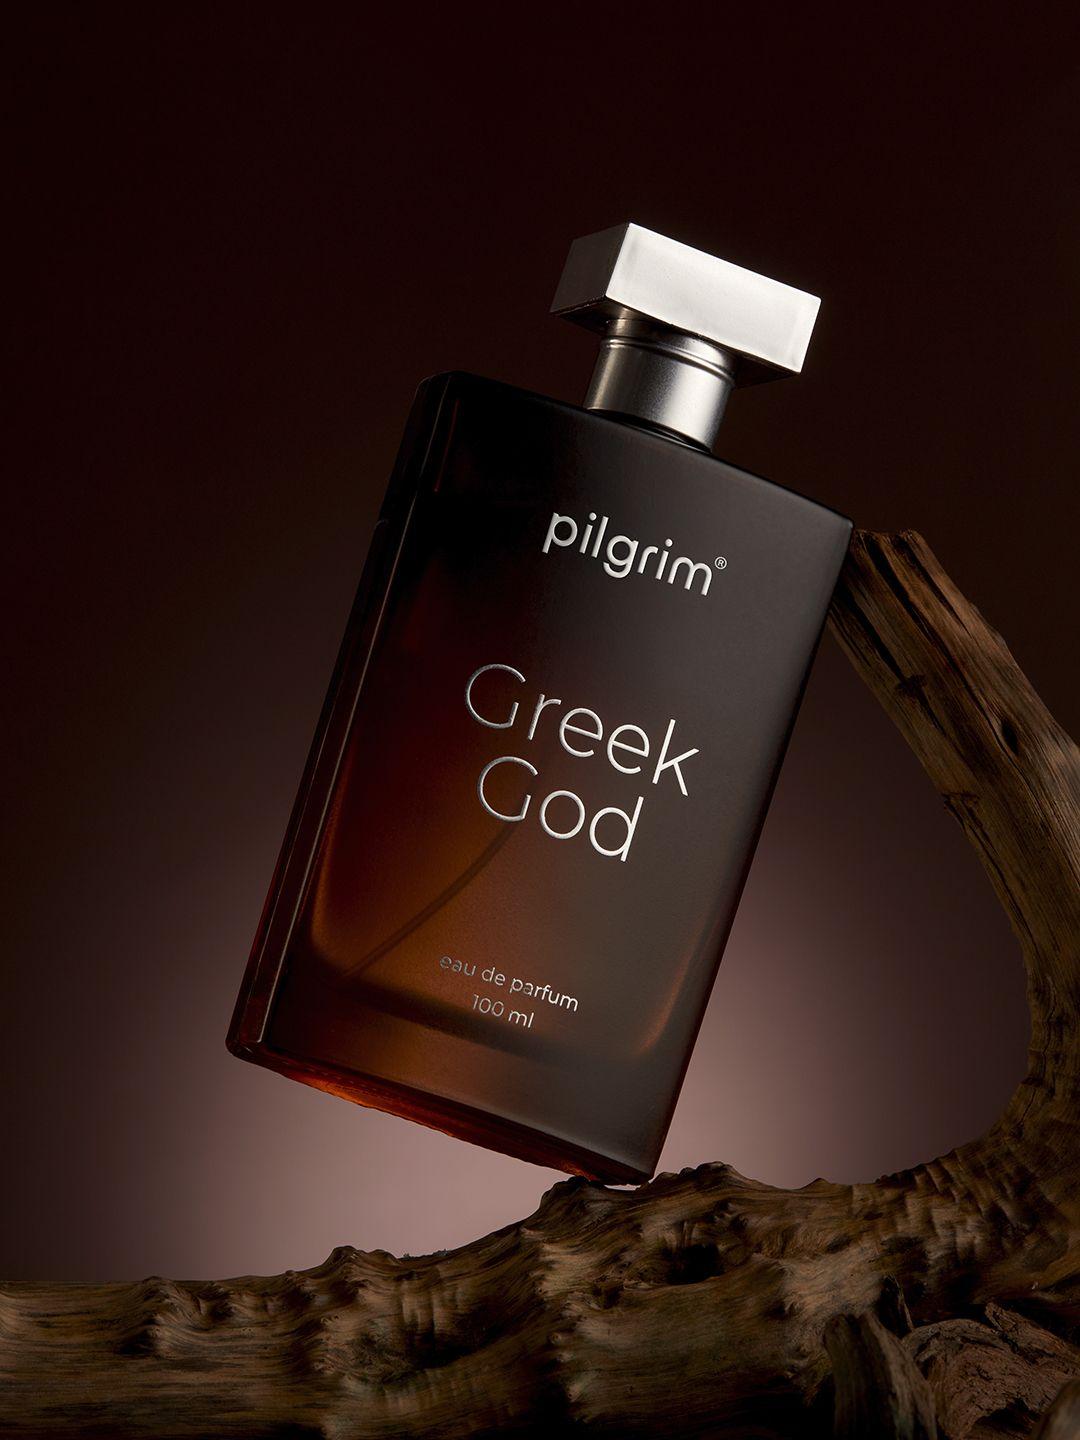 pilgrim greek god sandalwood & smoky cedarwood fragrance long-lasting eau de parfum- 100ml